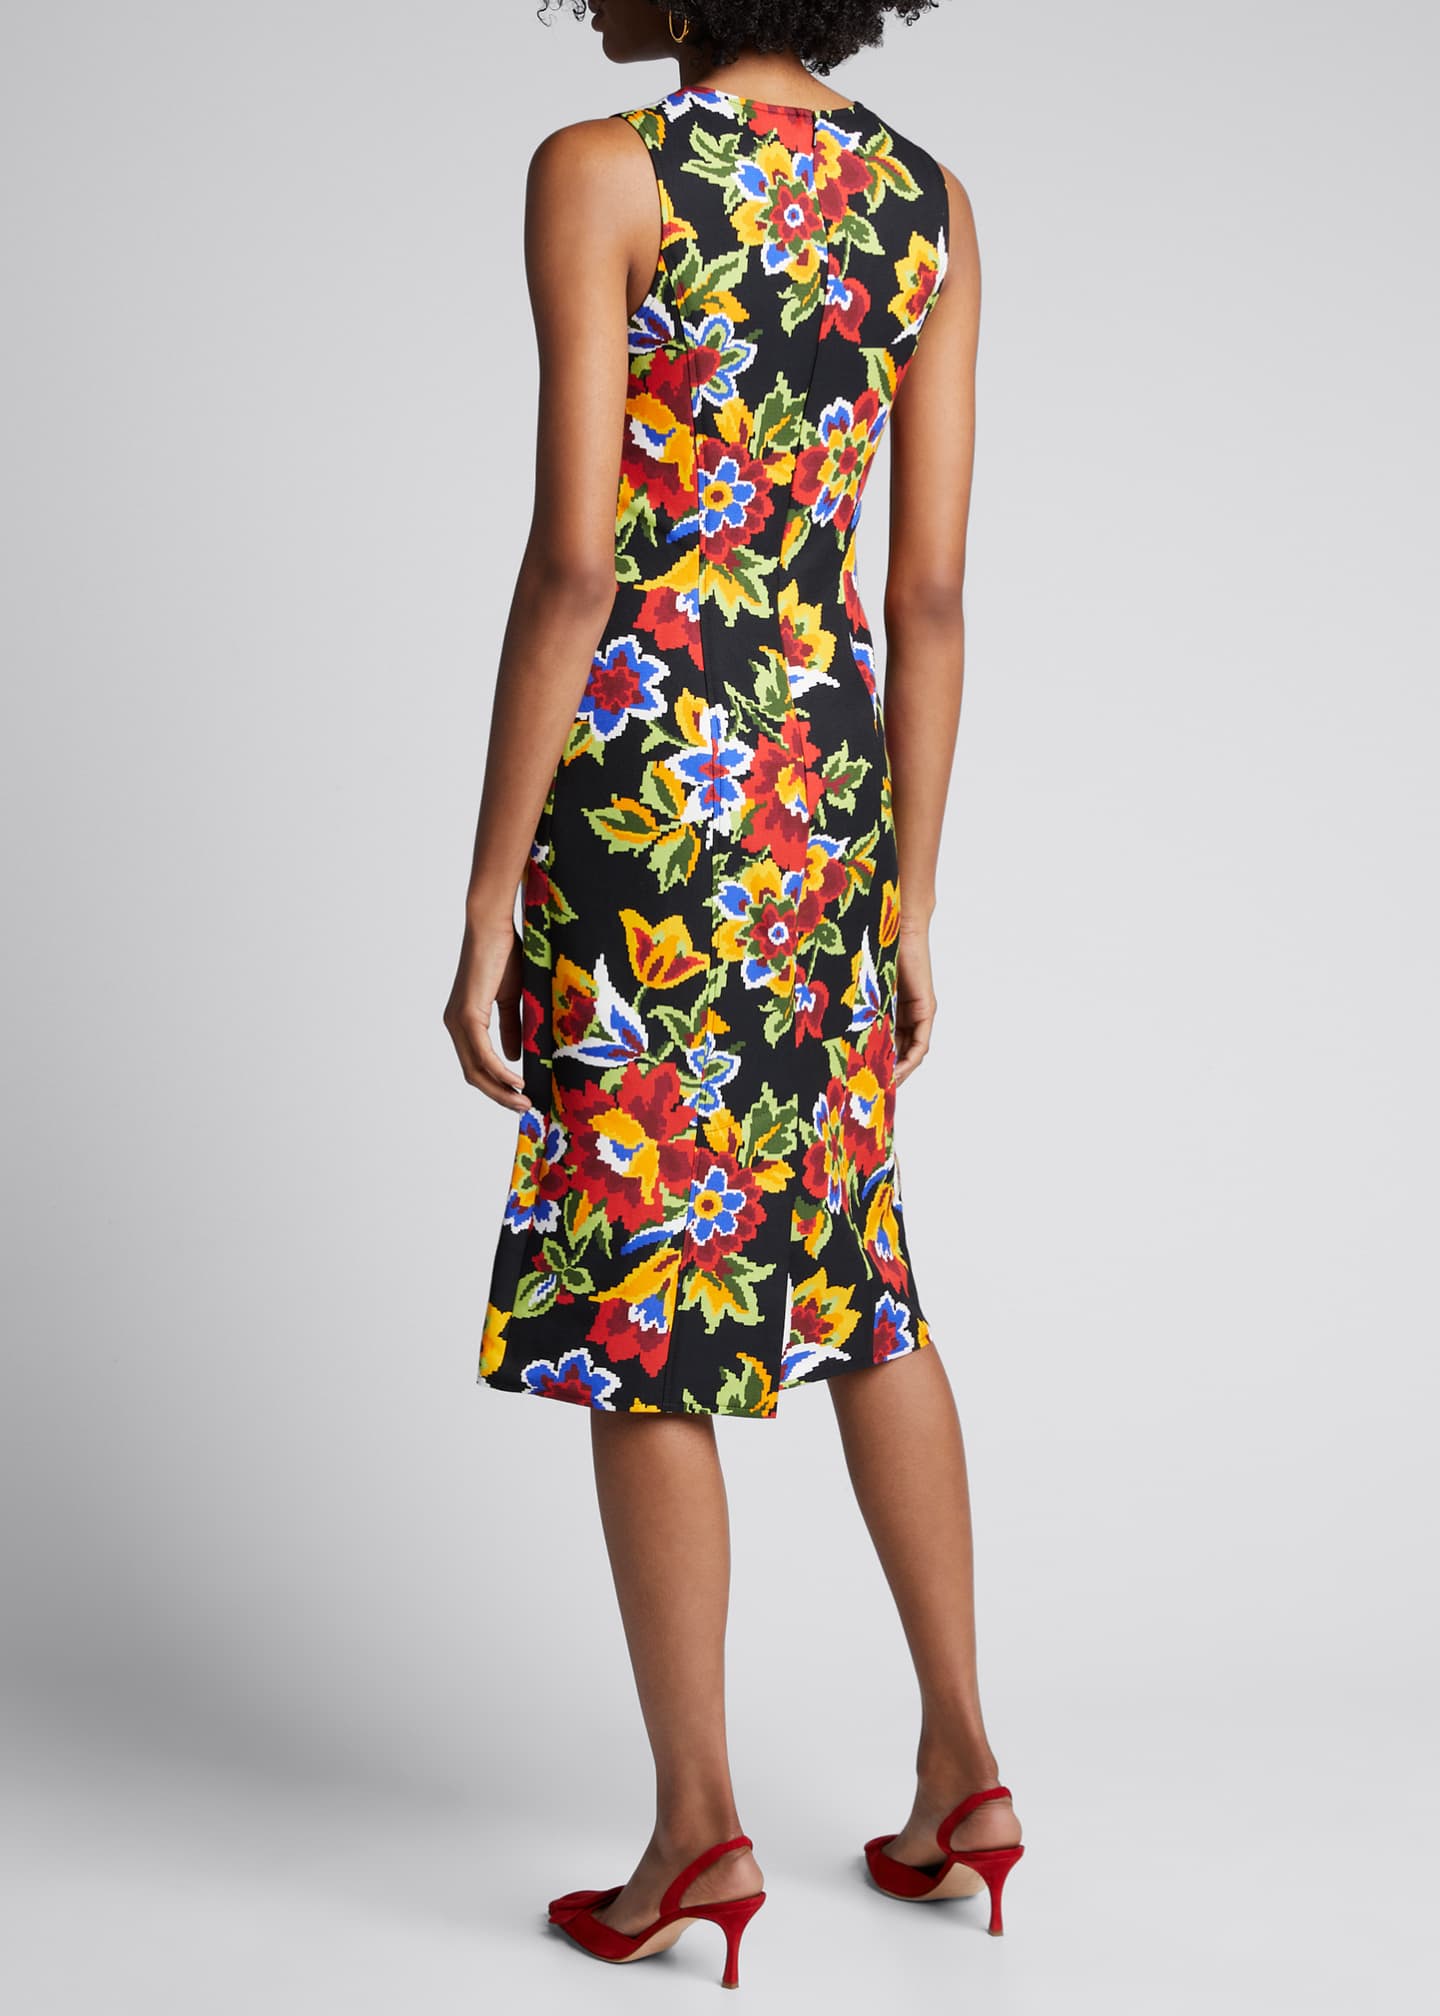 Carolina Herrera Floral Jacquard V-Neck Shift Dress - Bergdorf Goodman